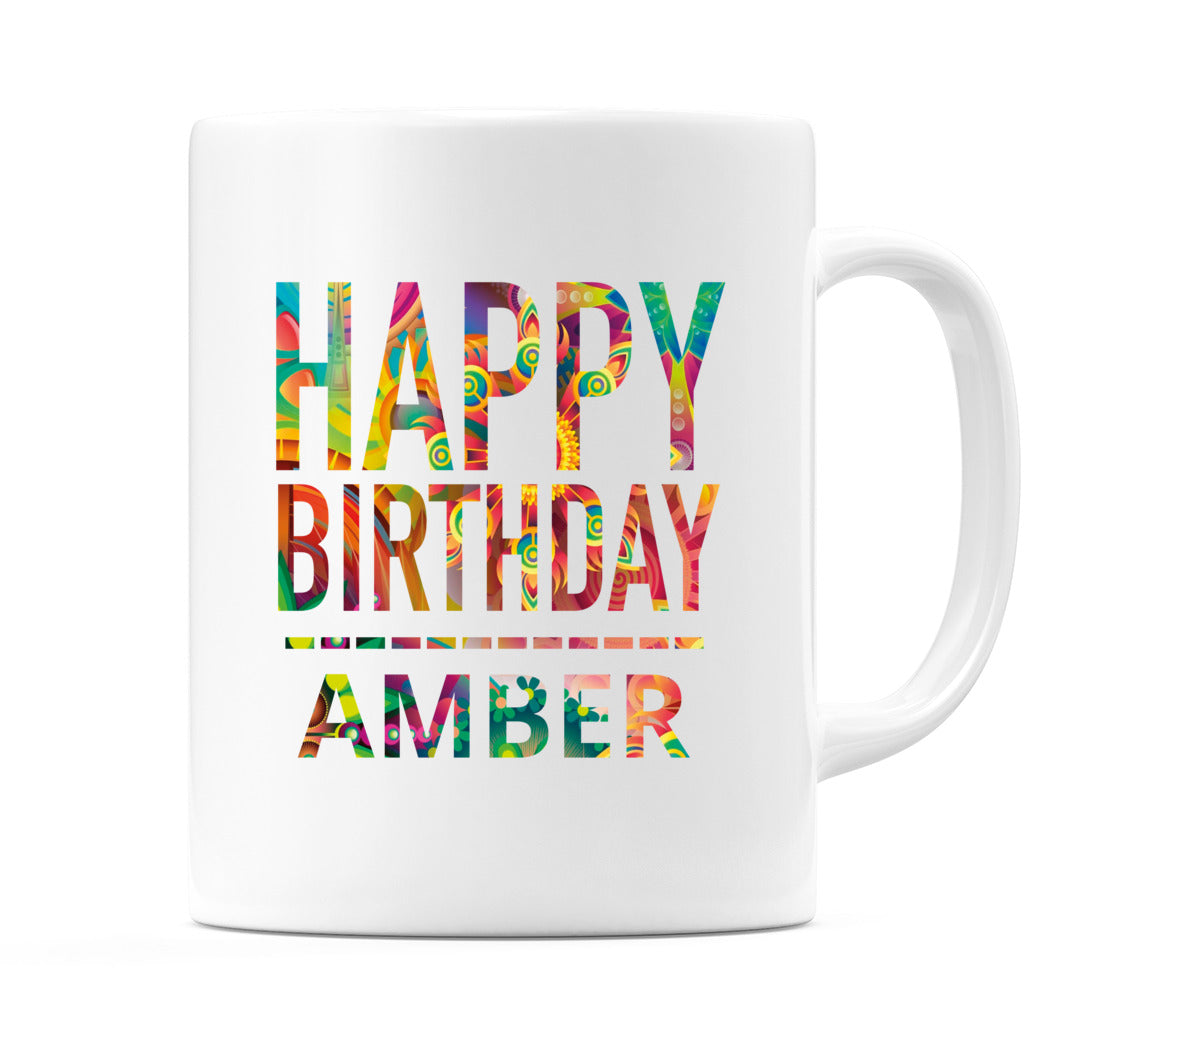 Happy Birthday Amber (Tie Dye Effect) Mug Cup by WeDoMugs